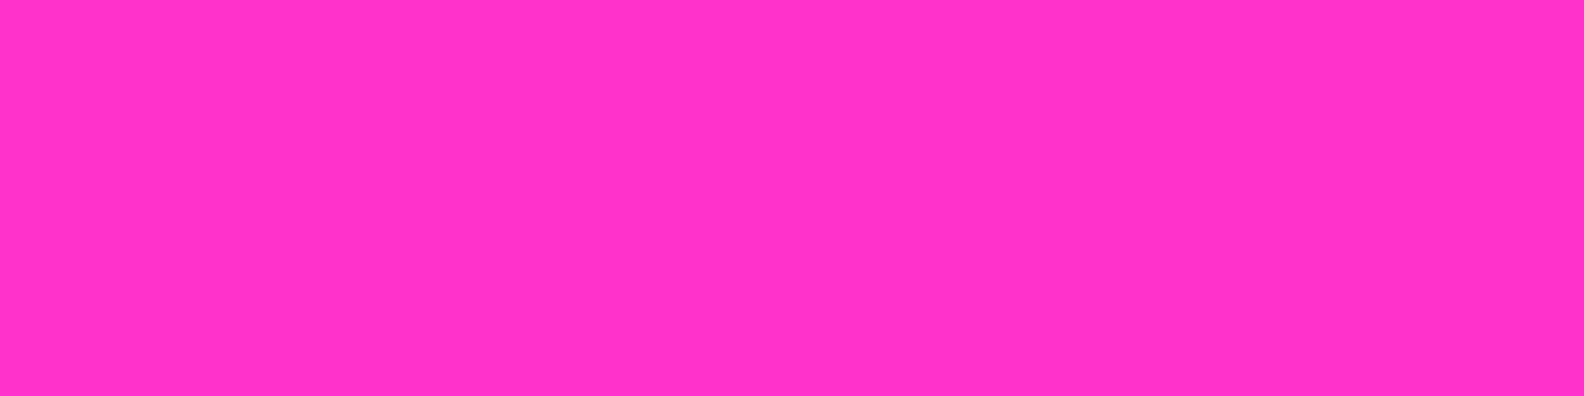 1584x396 Razzle Dazzle Rose Solid Color Background